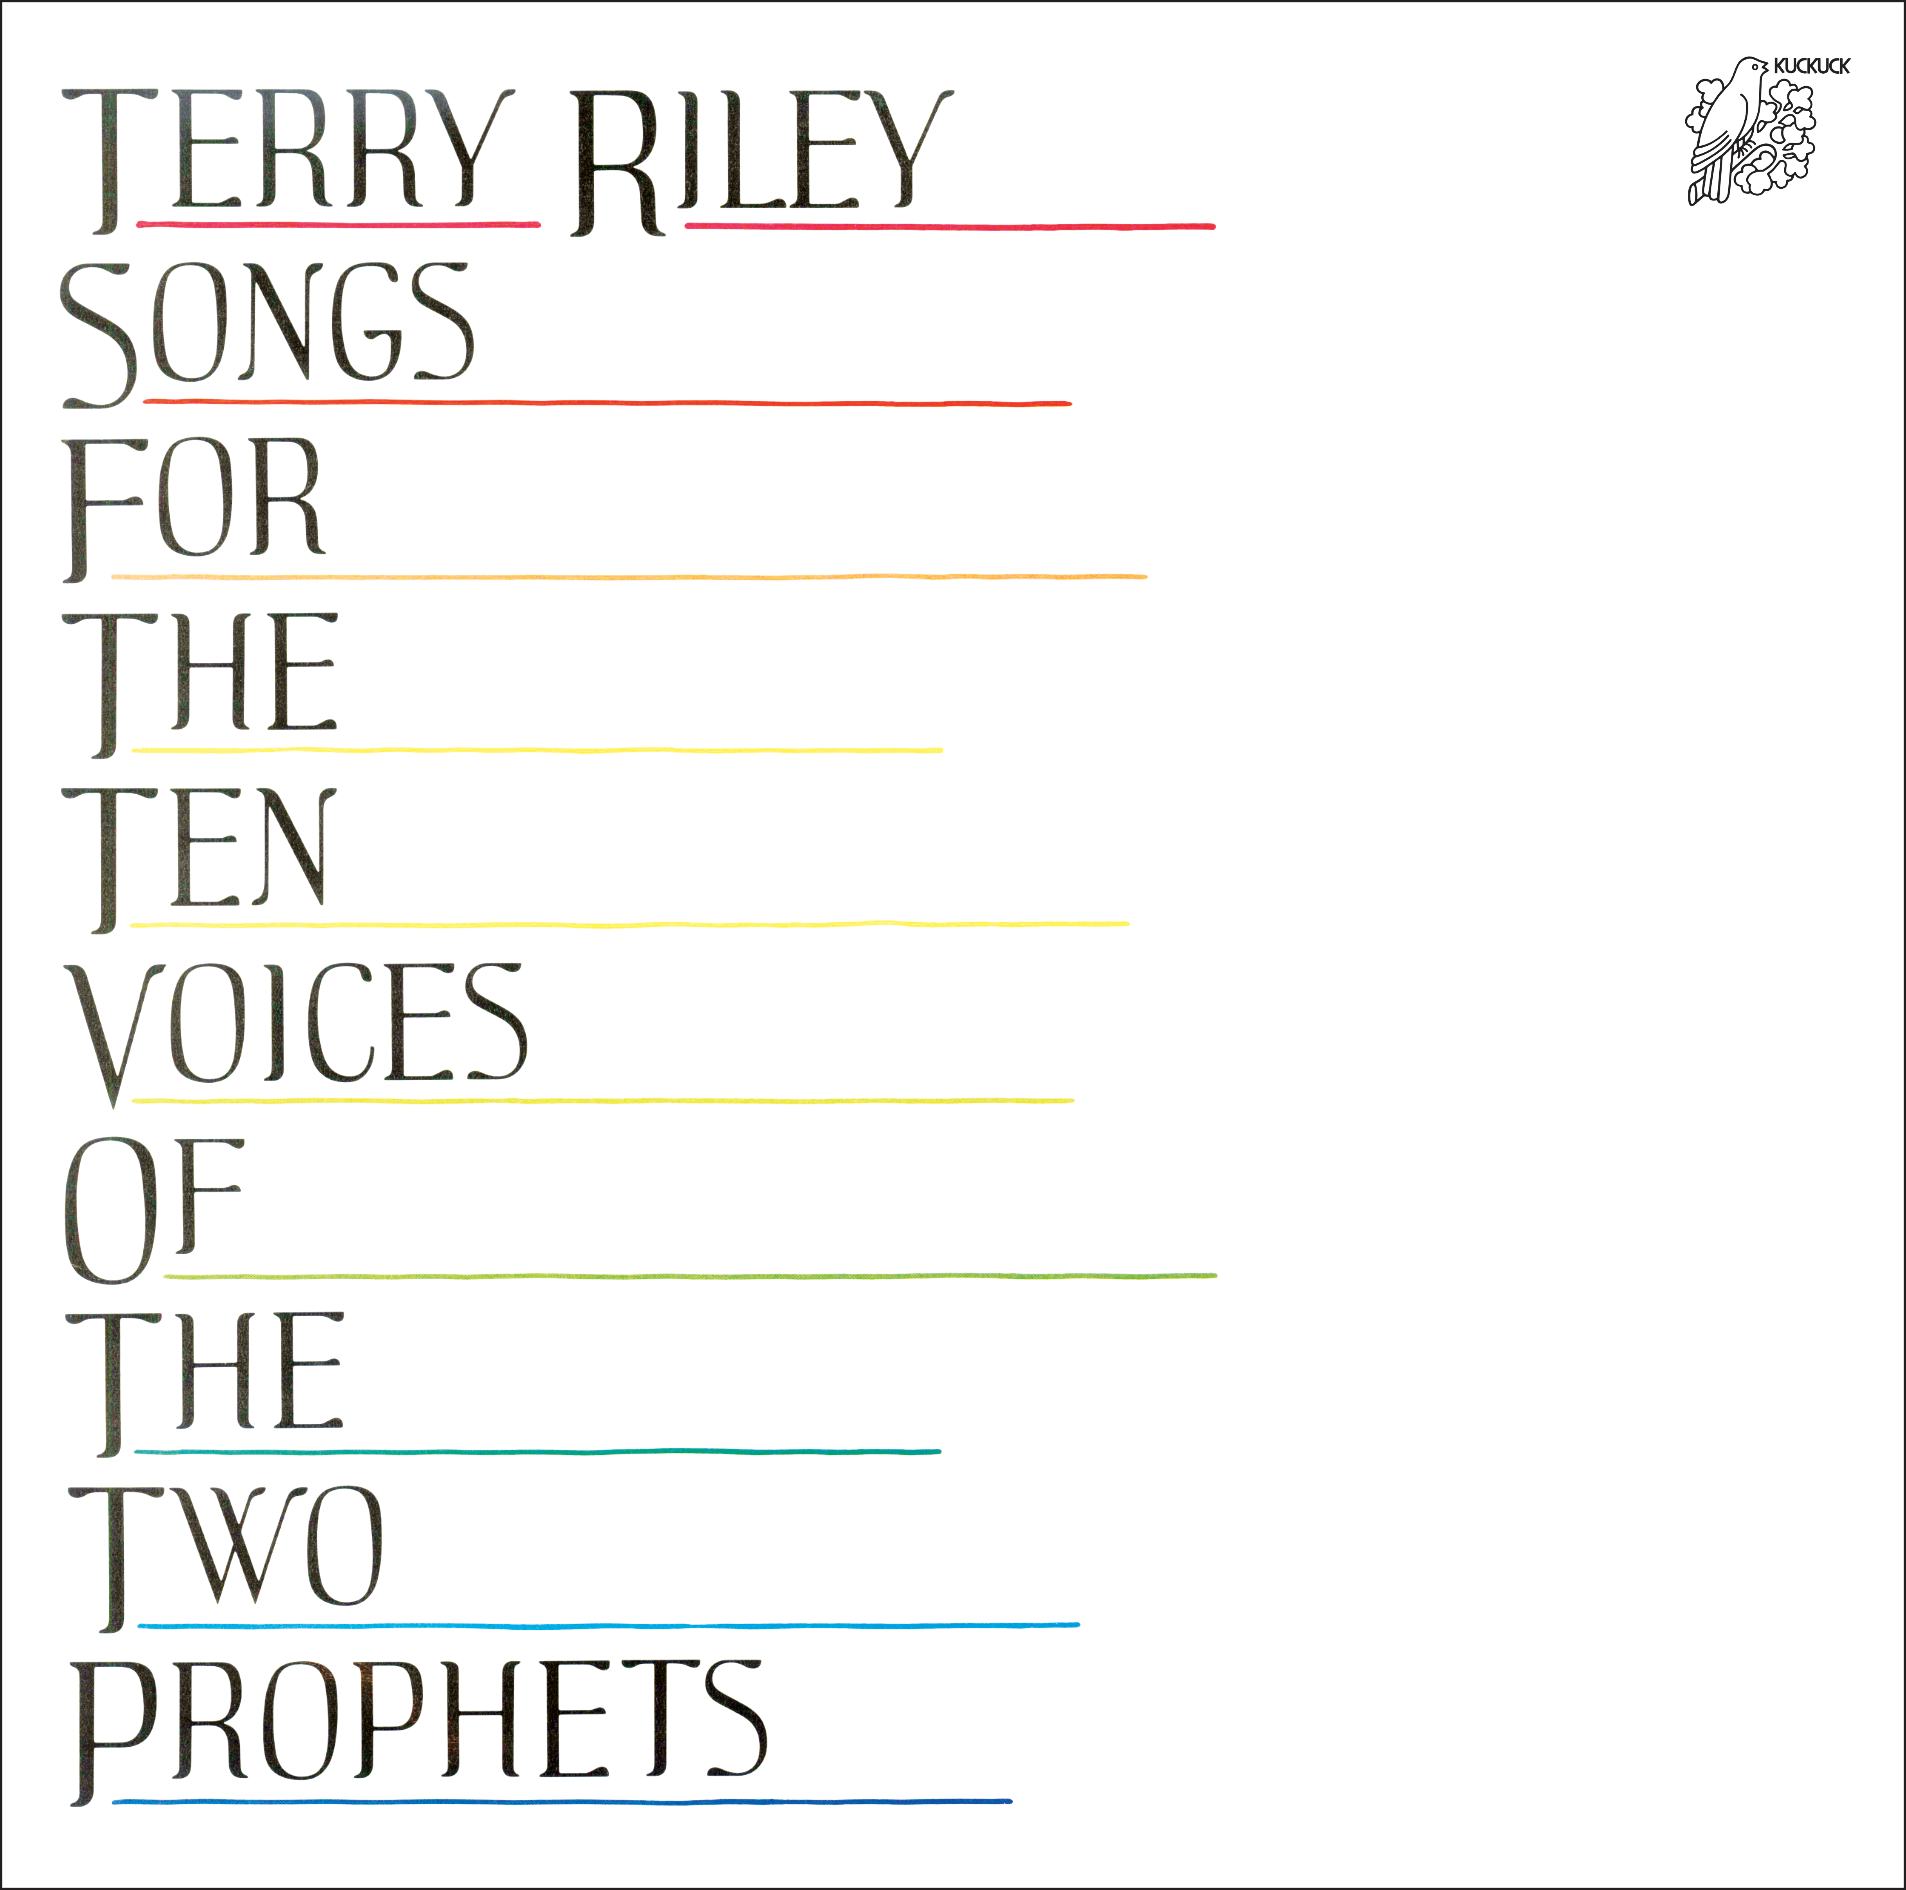 Terry Riley - Wikipedia